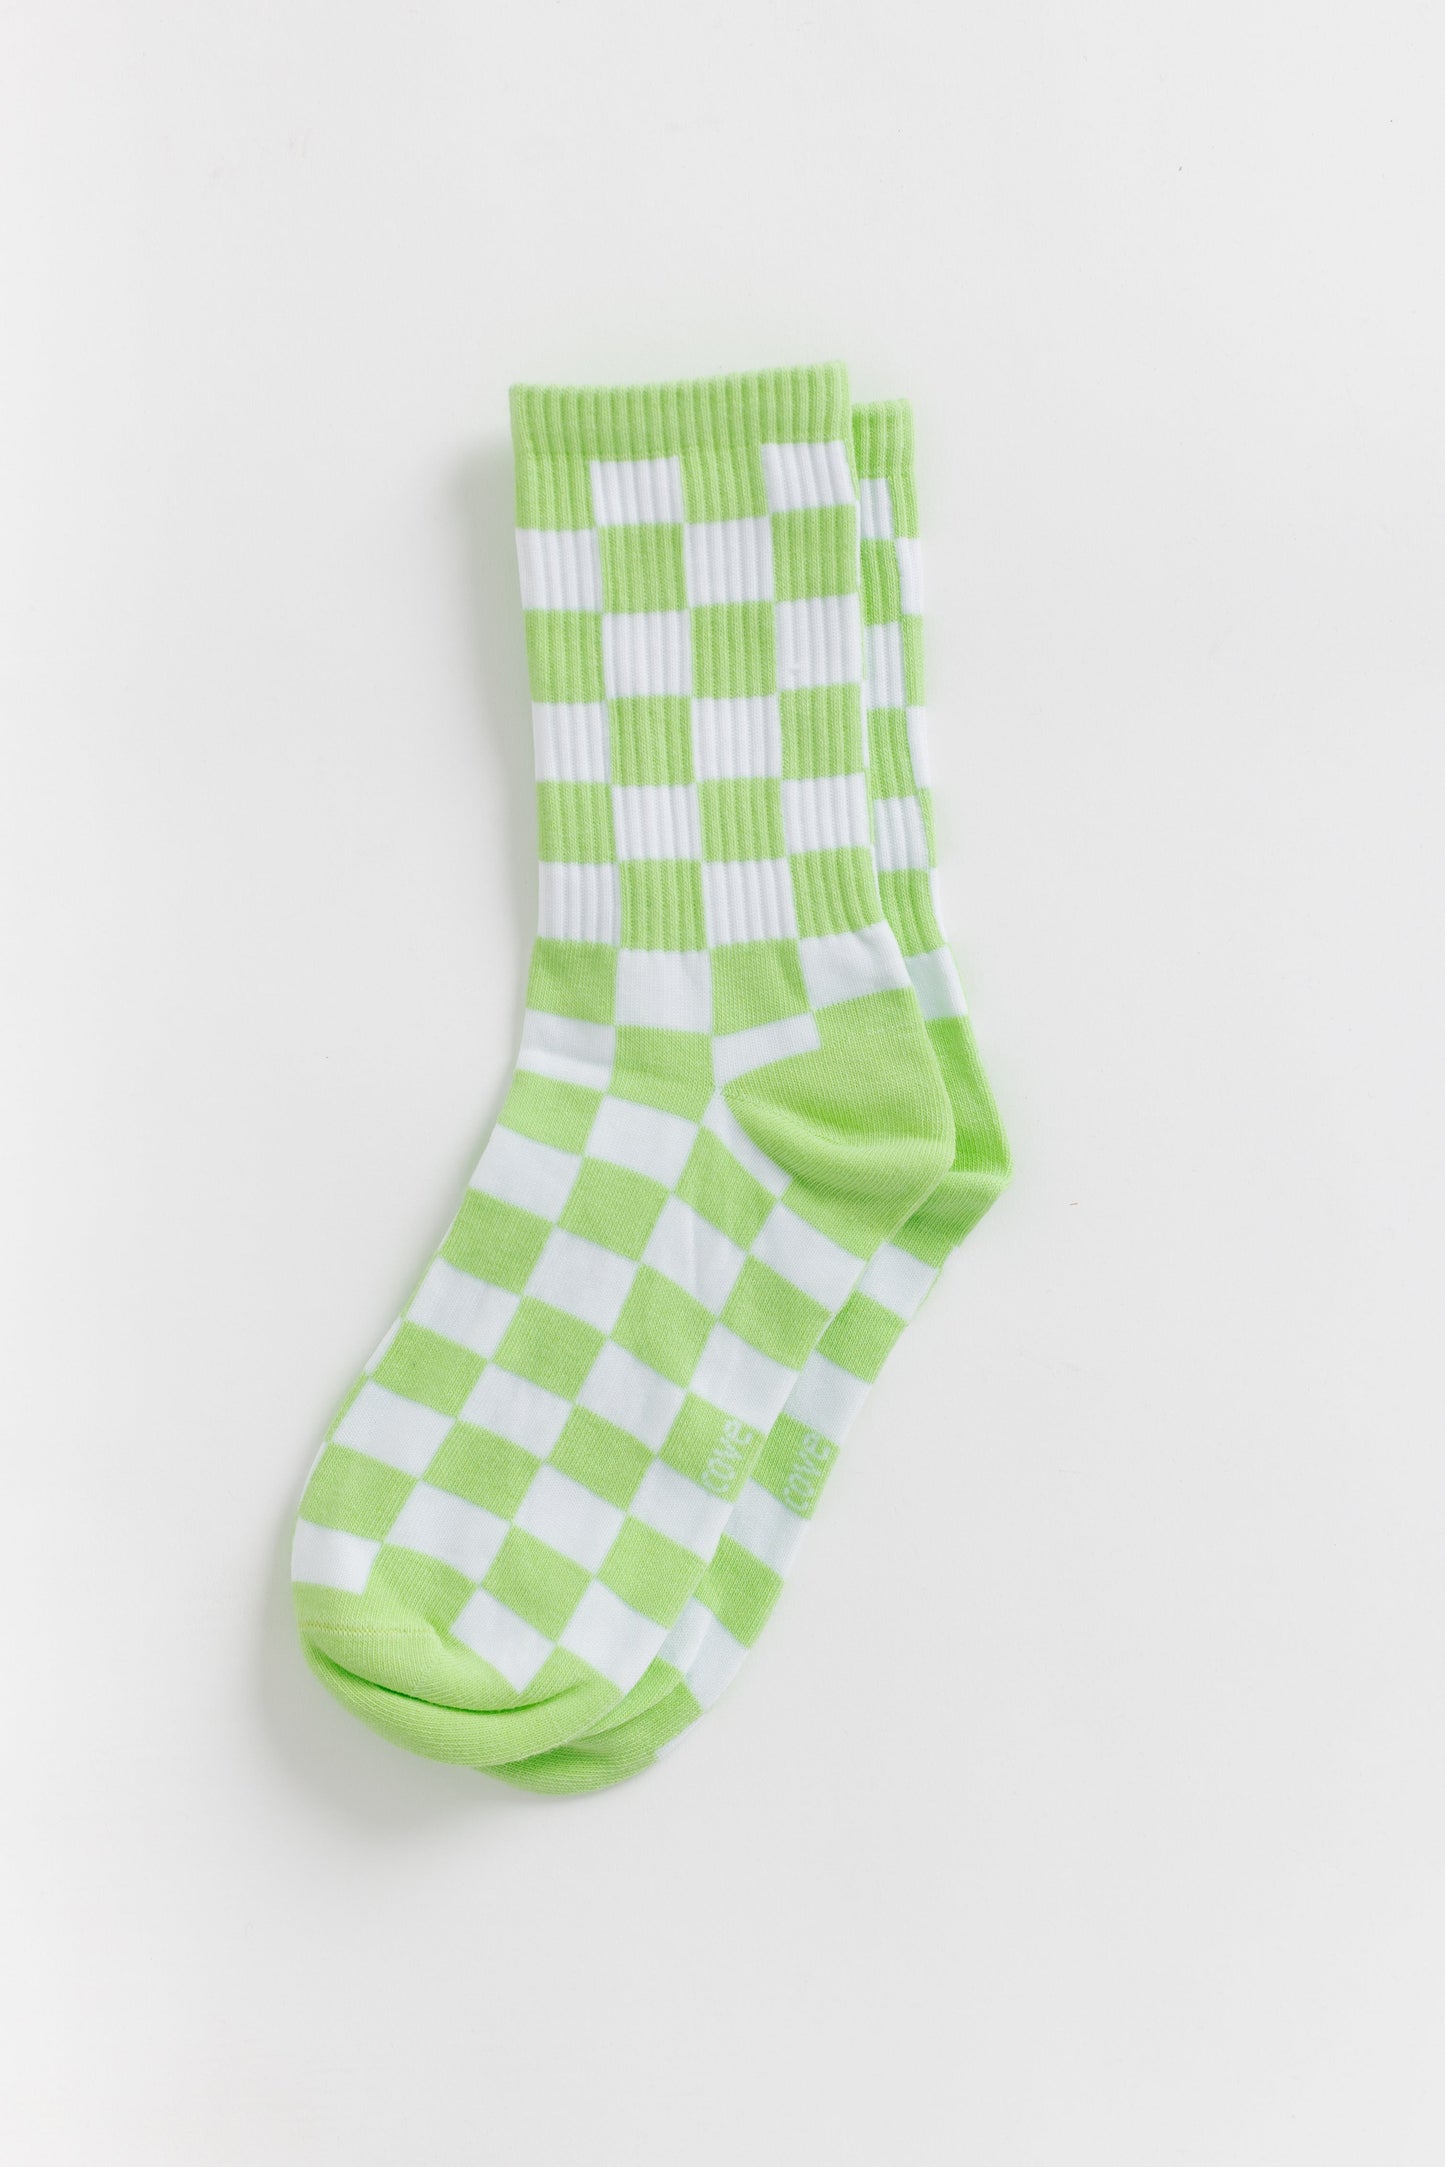 Cove Checker Retro Socks WOMEN'S SOCKS Cove Accessories Lime Green/White OS 